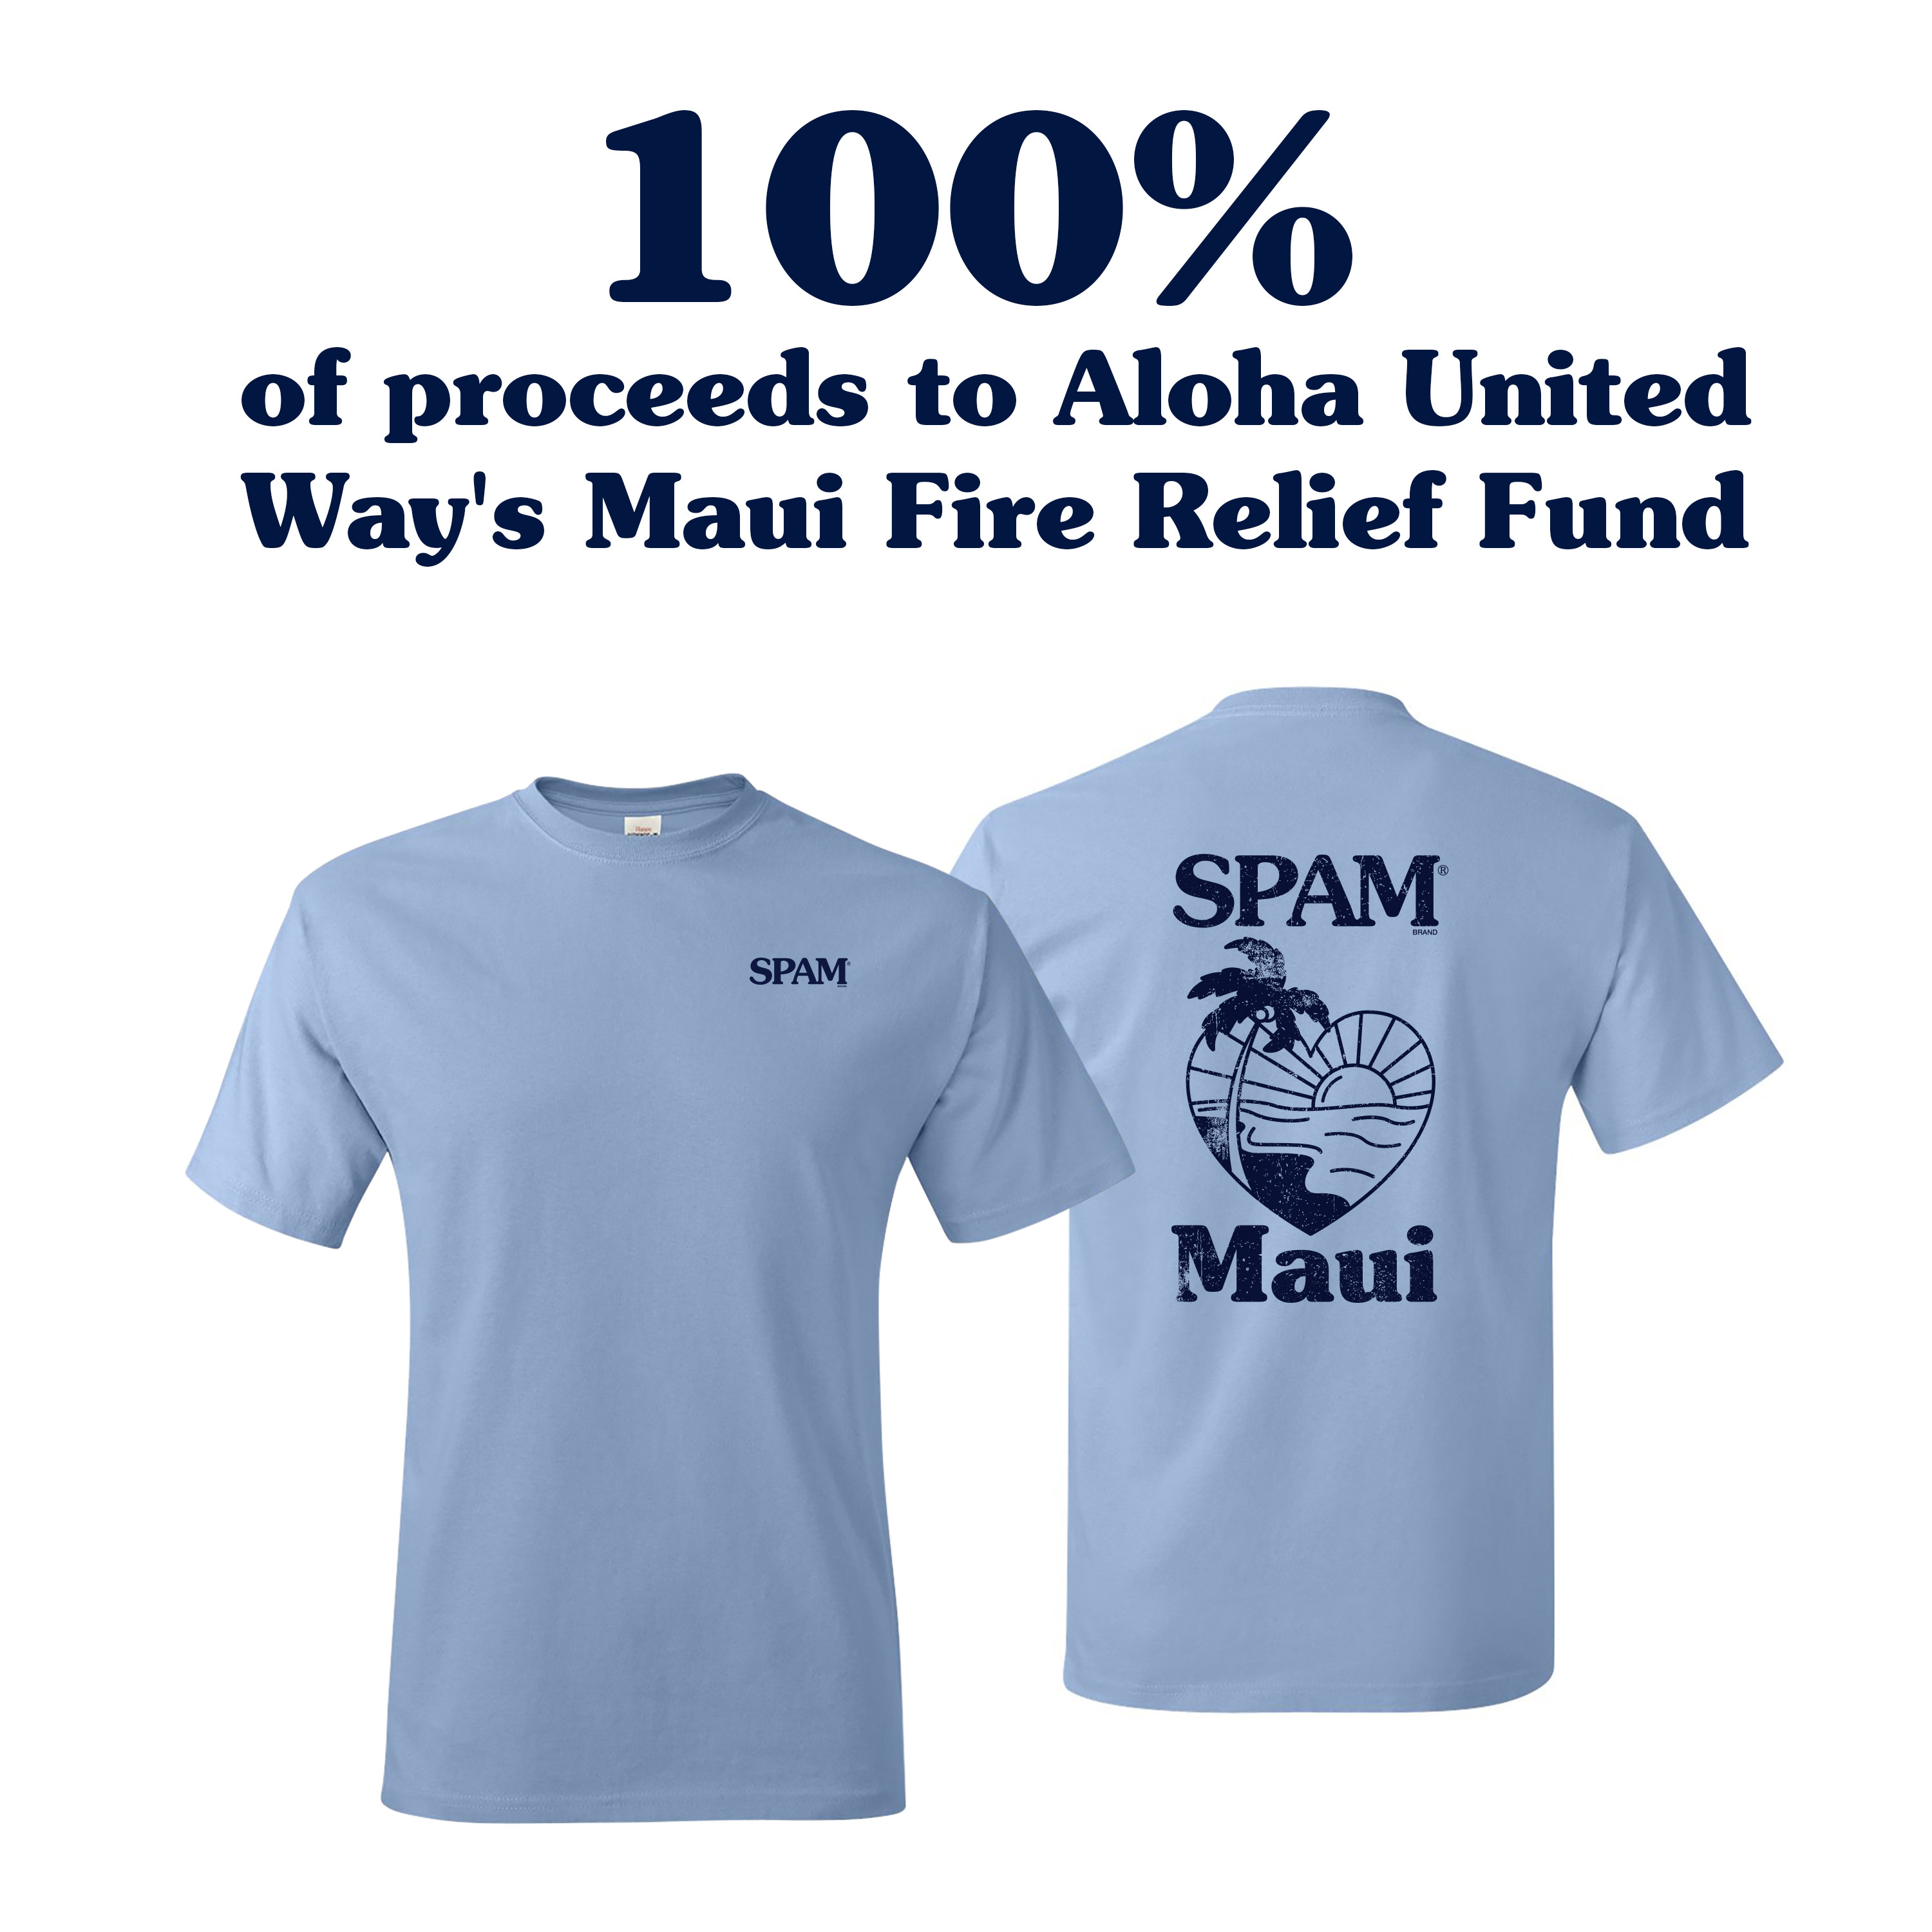 SPAM® Brand Loves Maui Shirt - 100% cotton, light blue